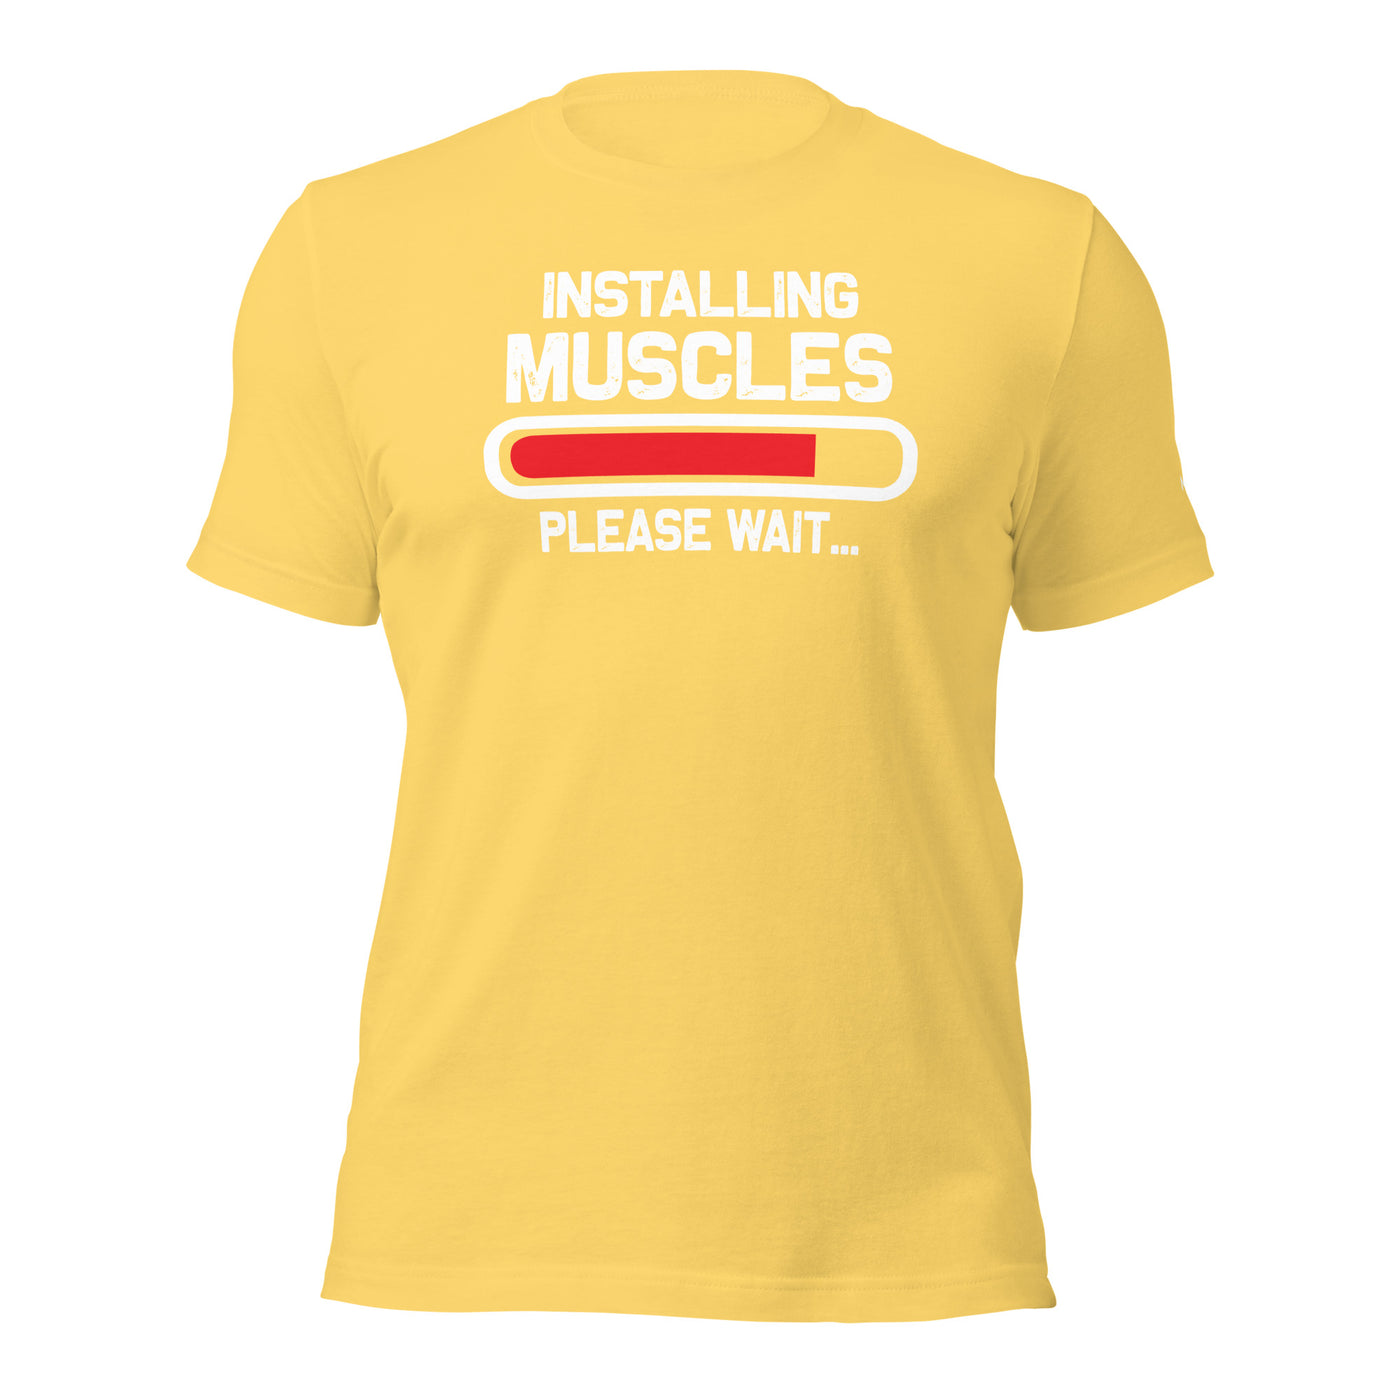 Installing muscles please wait - Unisex t-shirt